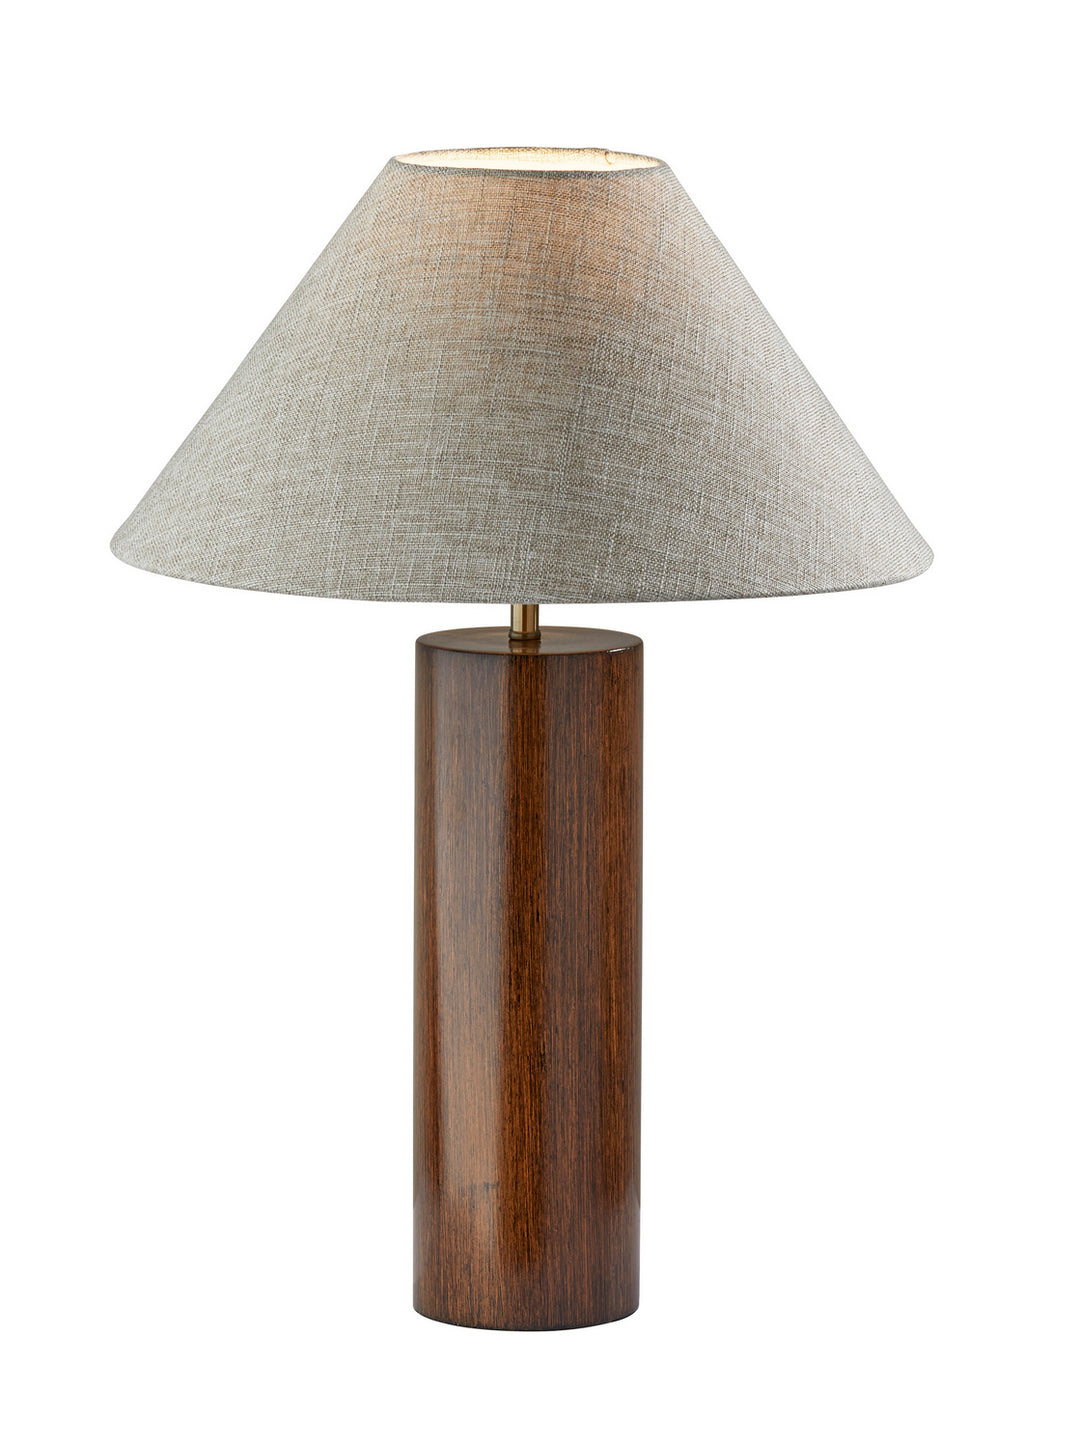 Adesso Home 1509-15  Martin Lamp Walnut Poplar Wood W. Antique Brass Accent